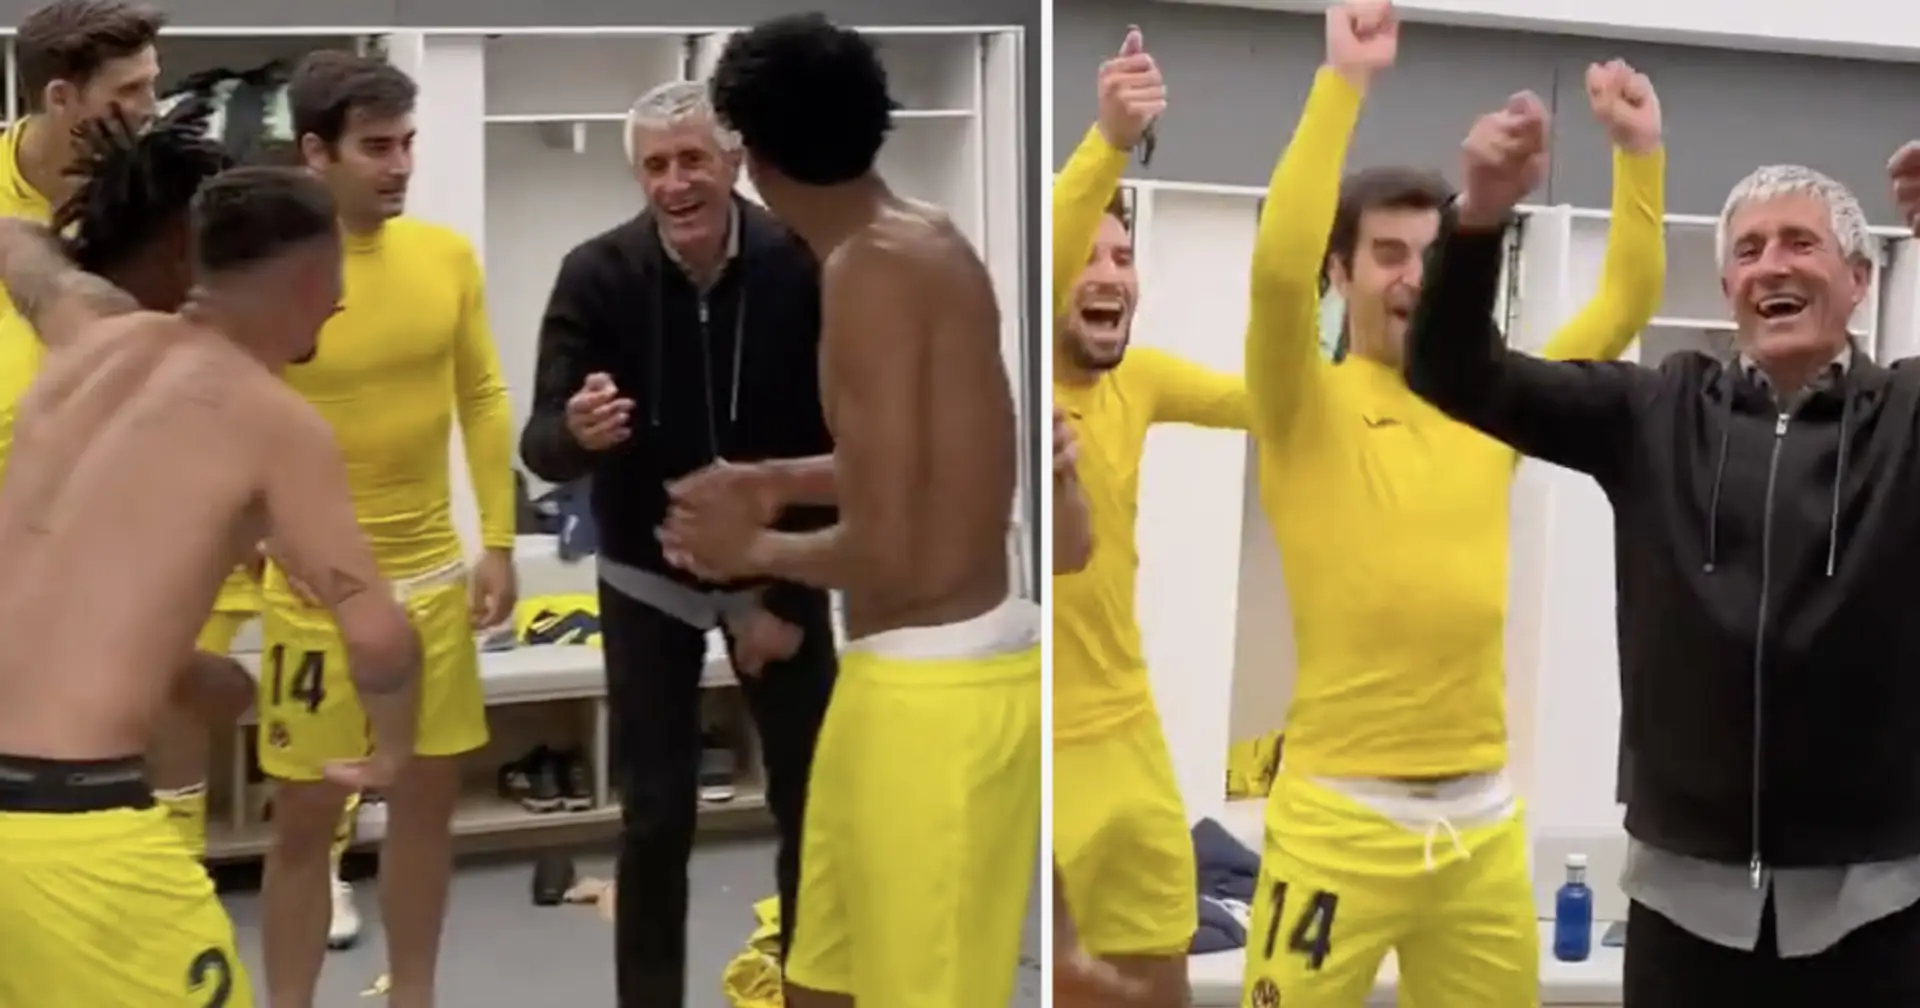 Setiens Villarreal verspottet Real Madrid mit einem Gesang in der Umkleidekabine (Video)